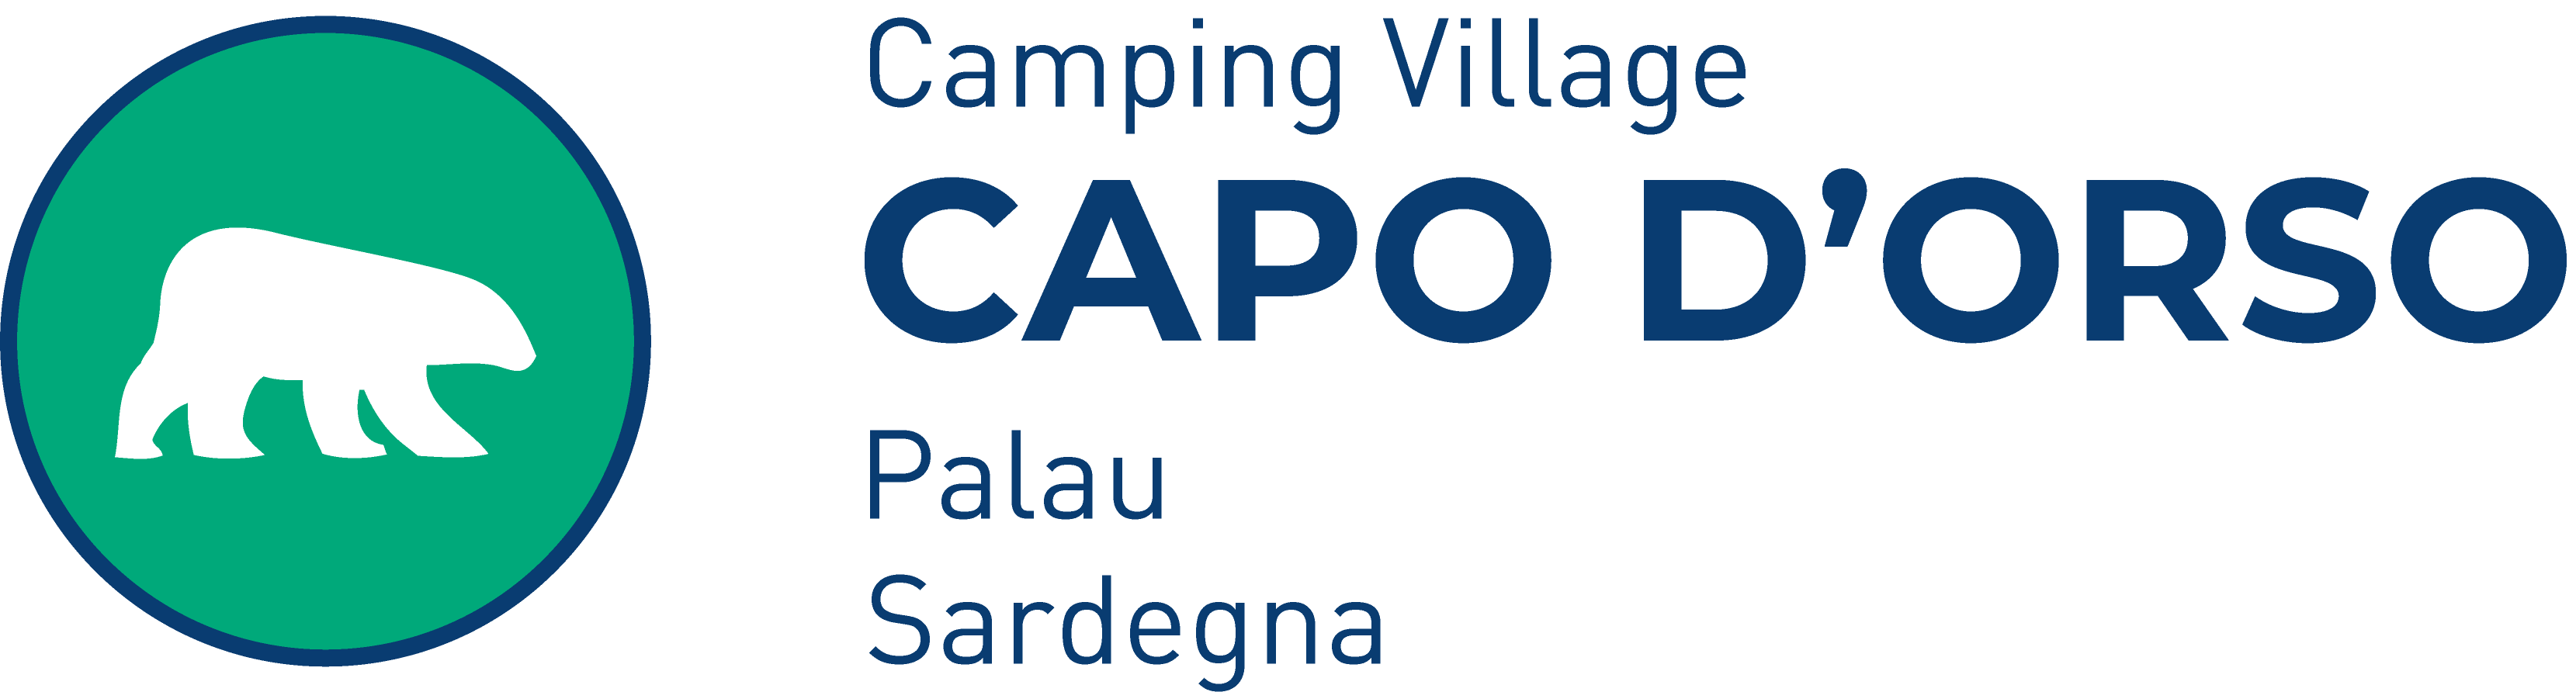 Camping Village Capo d'Orso